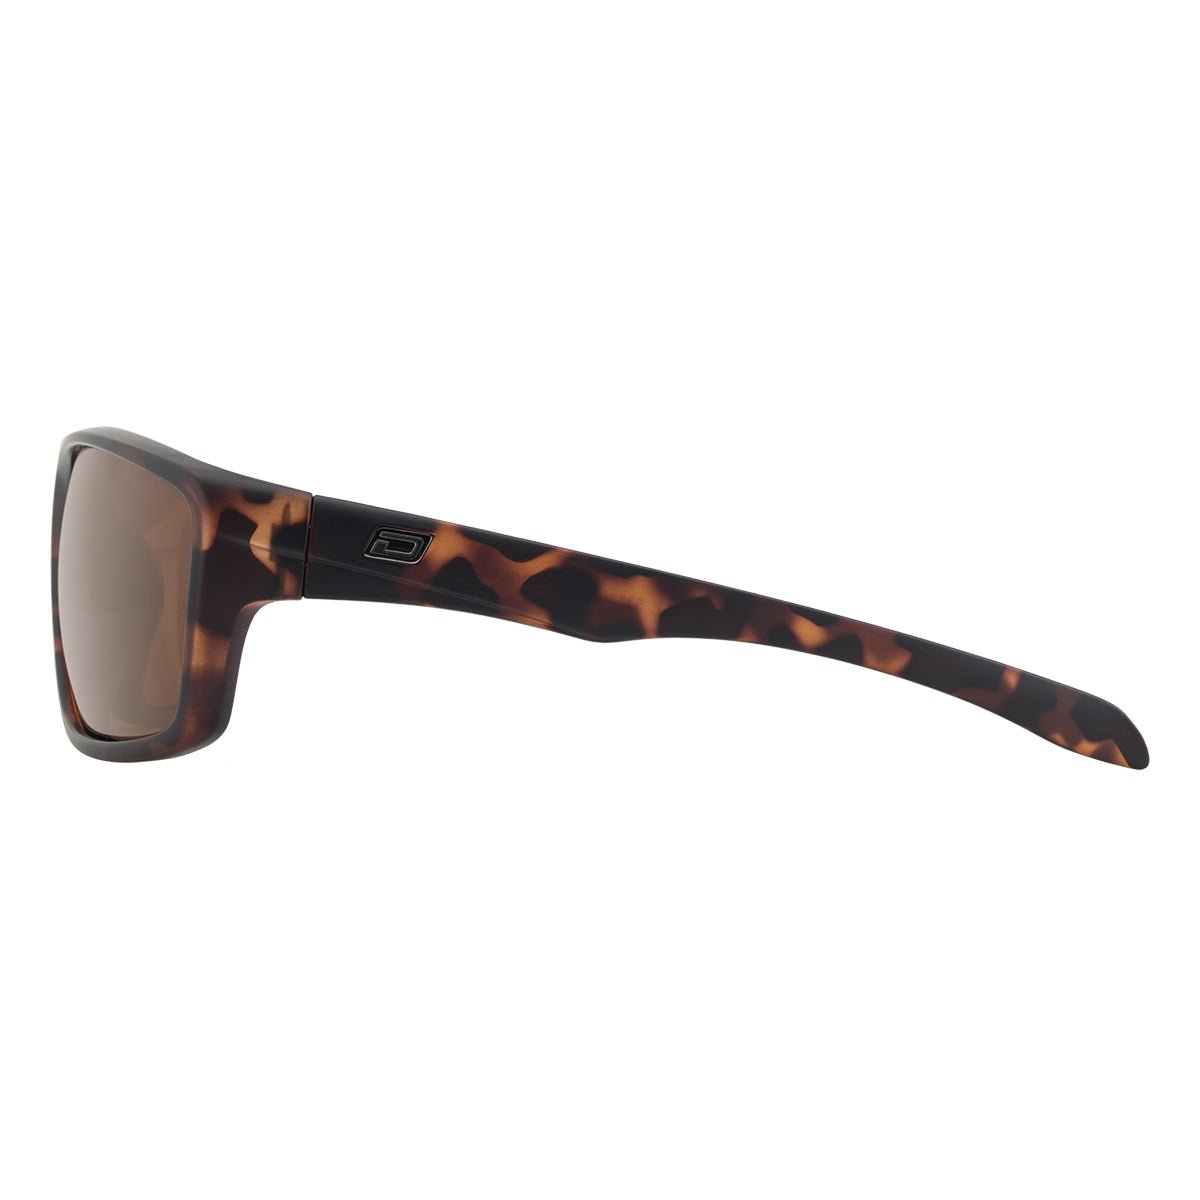 Dirty Dog Axle Sunglasses - Worthing Watersports - 53530 - Sunglasses - Dirty Dog